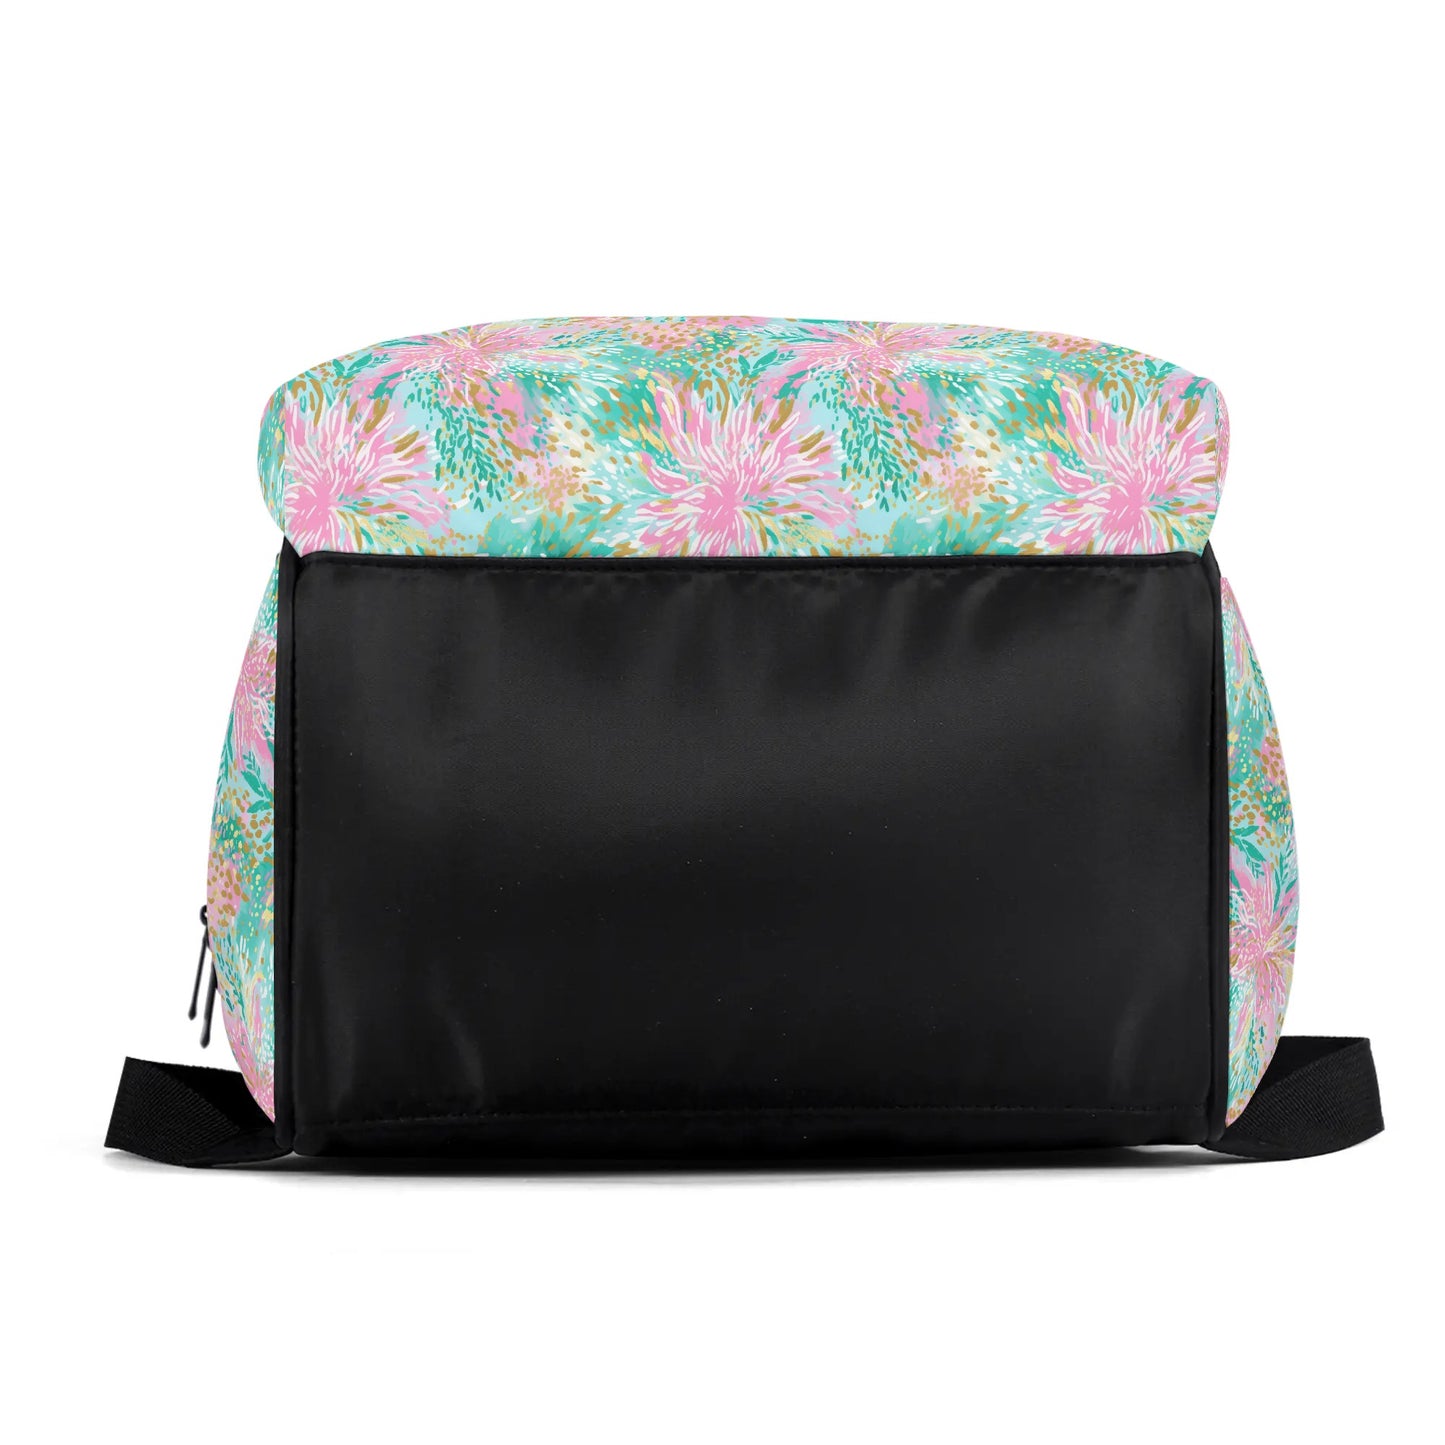 Soft Petal Symphony: Pastel Pink and Green Watercolor Flower Bursts Large Capacity Backpack Diaper Nursing Bag